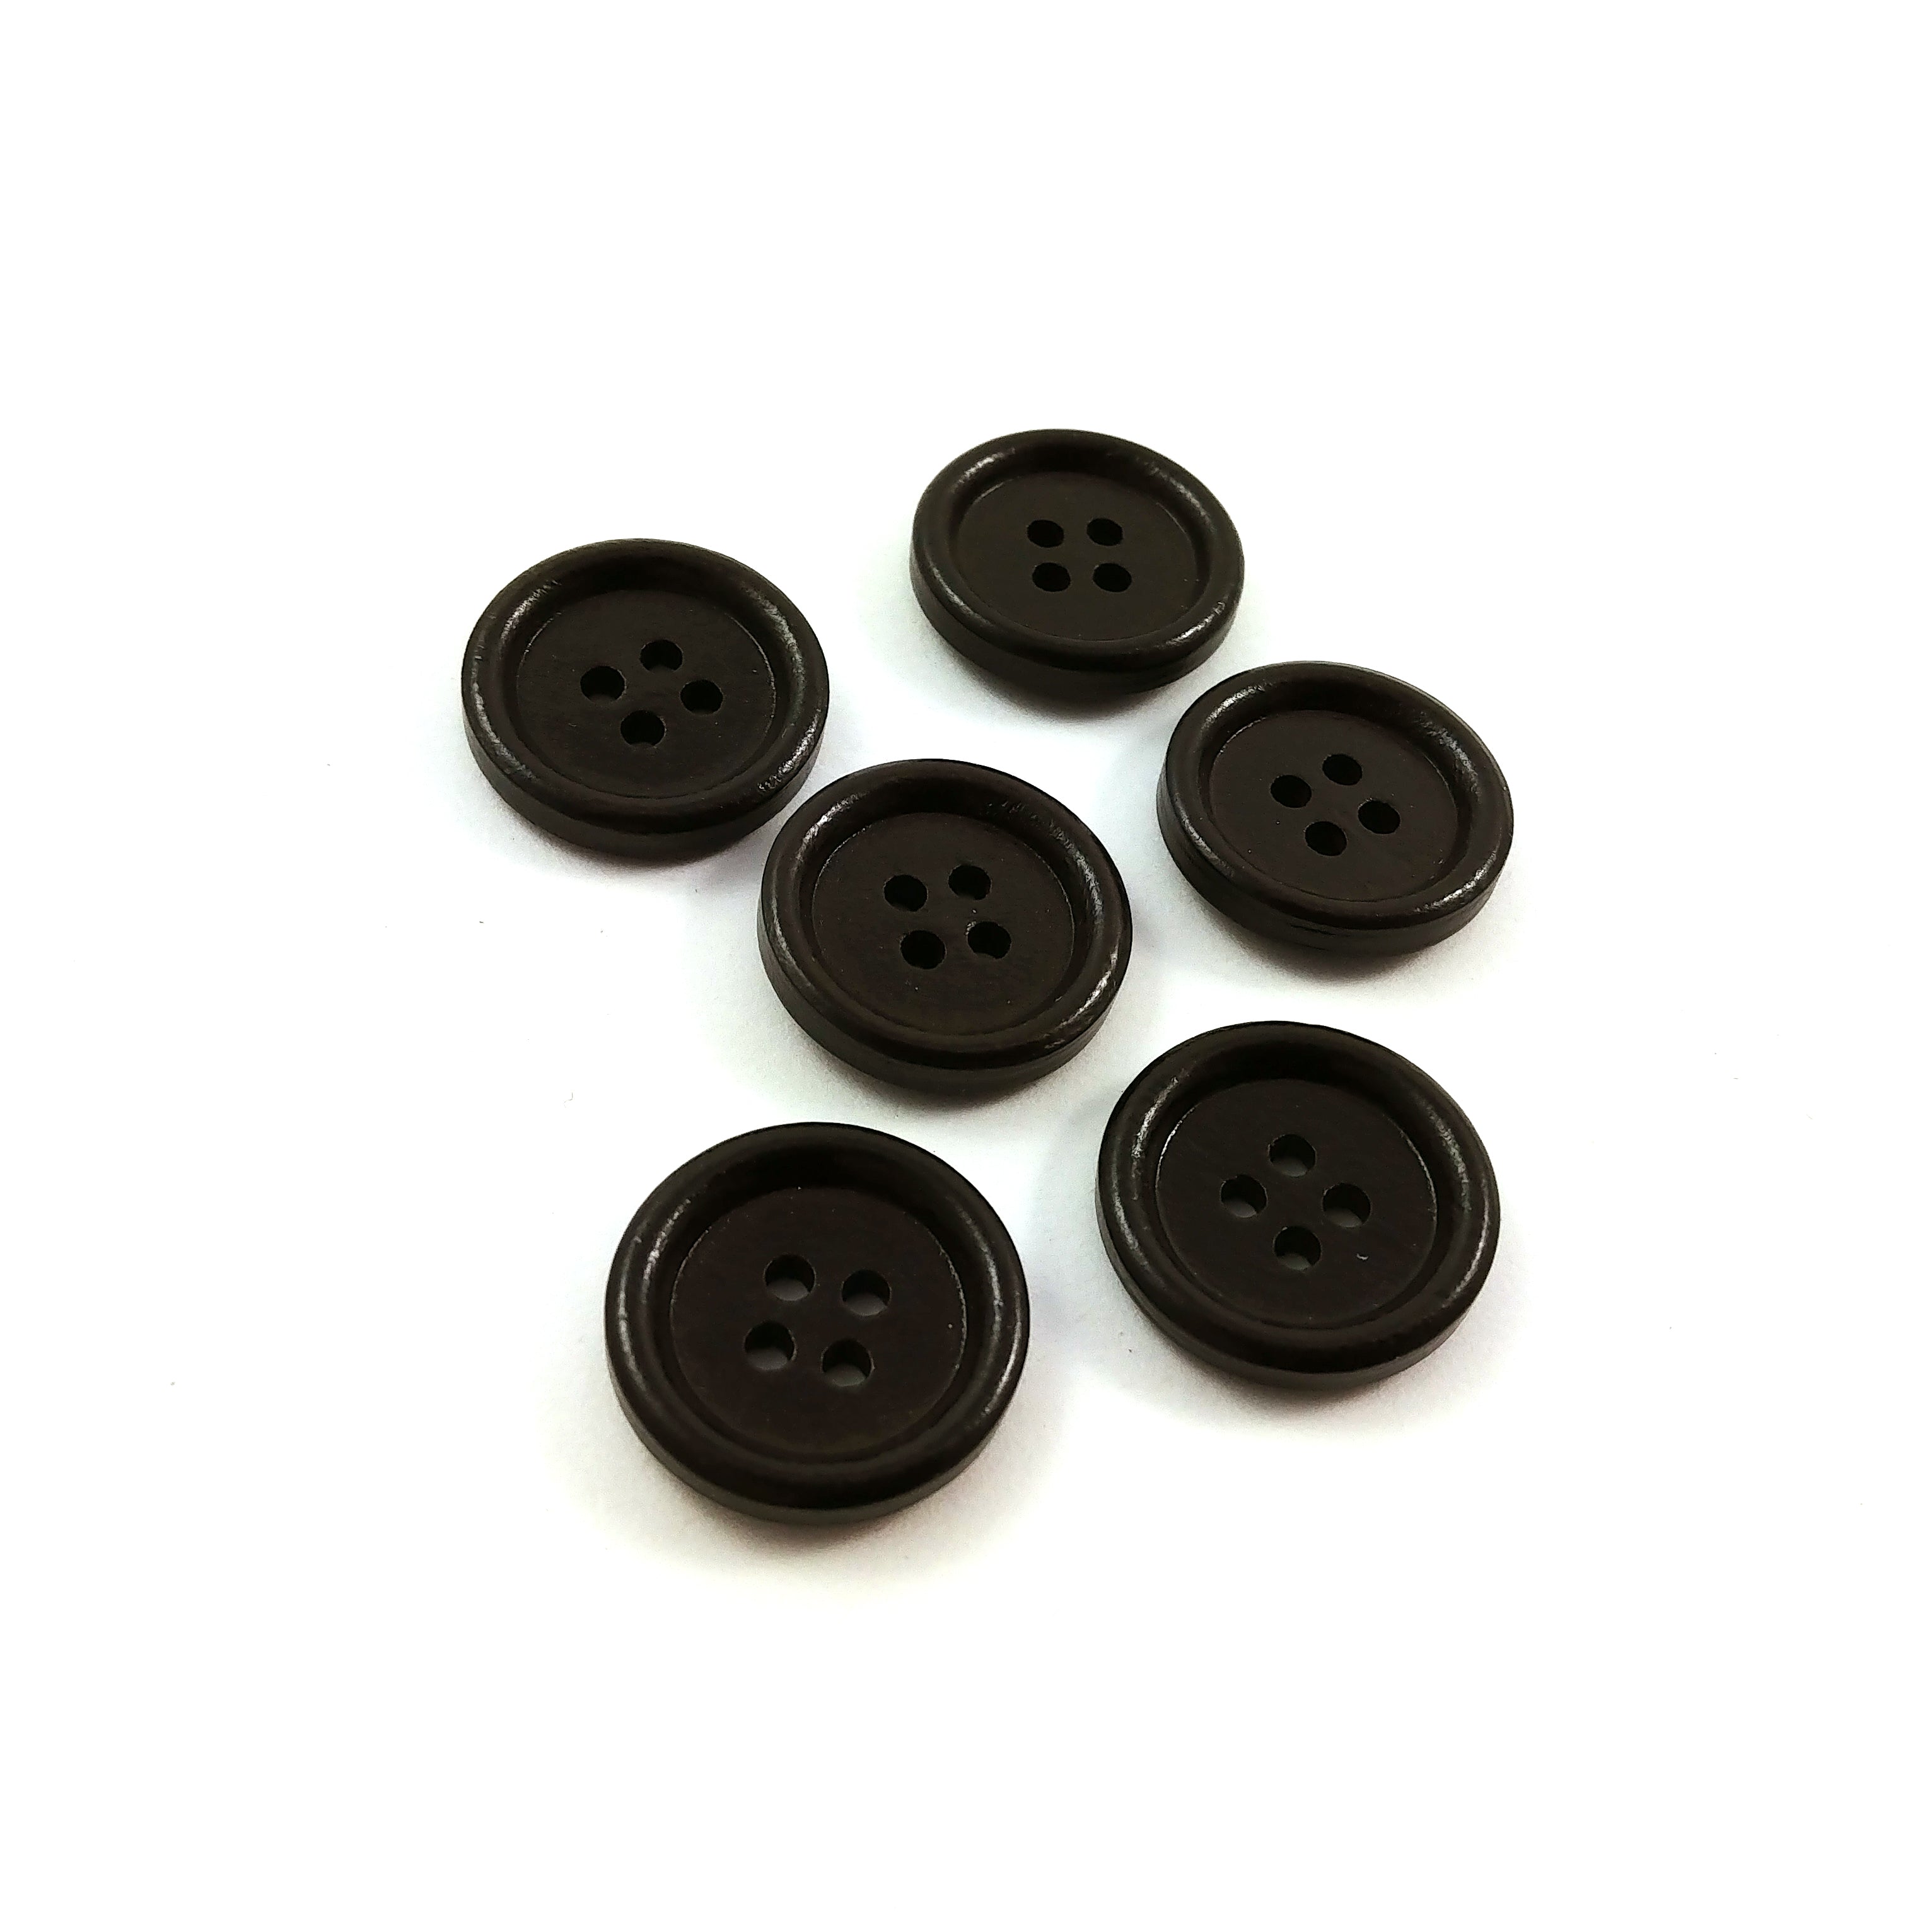 Dark brown Wooden Craft Buttons 18mm - set of 6 wood button